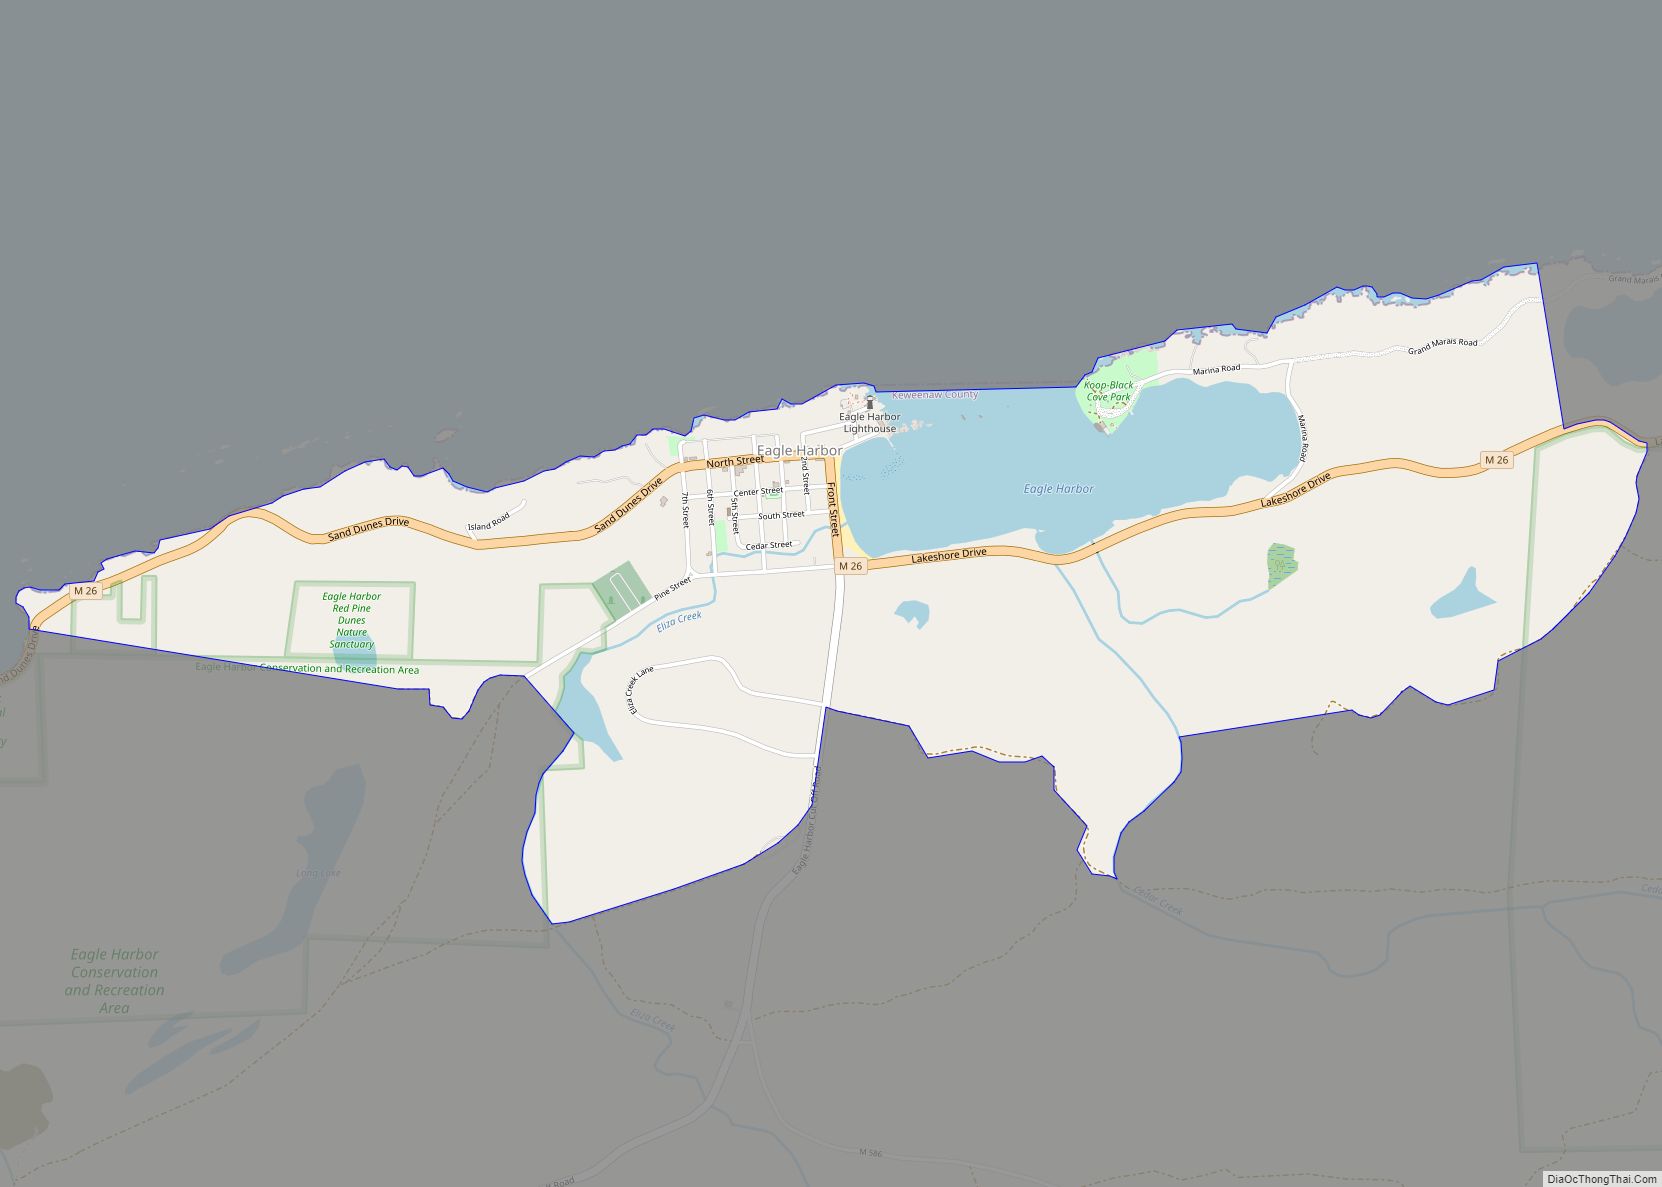 Map of Eagle Harbor CDP, Michigan